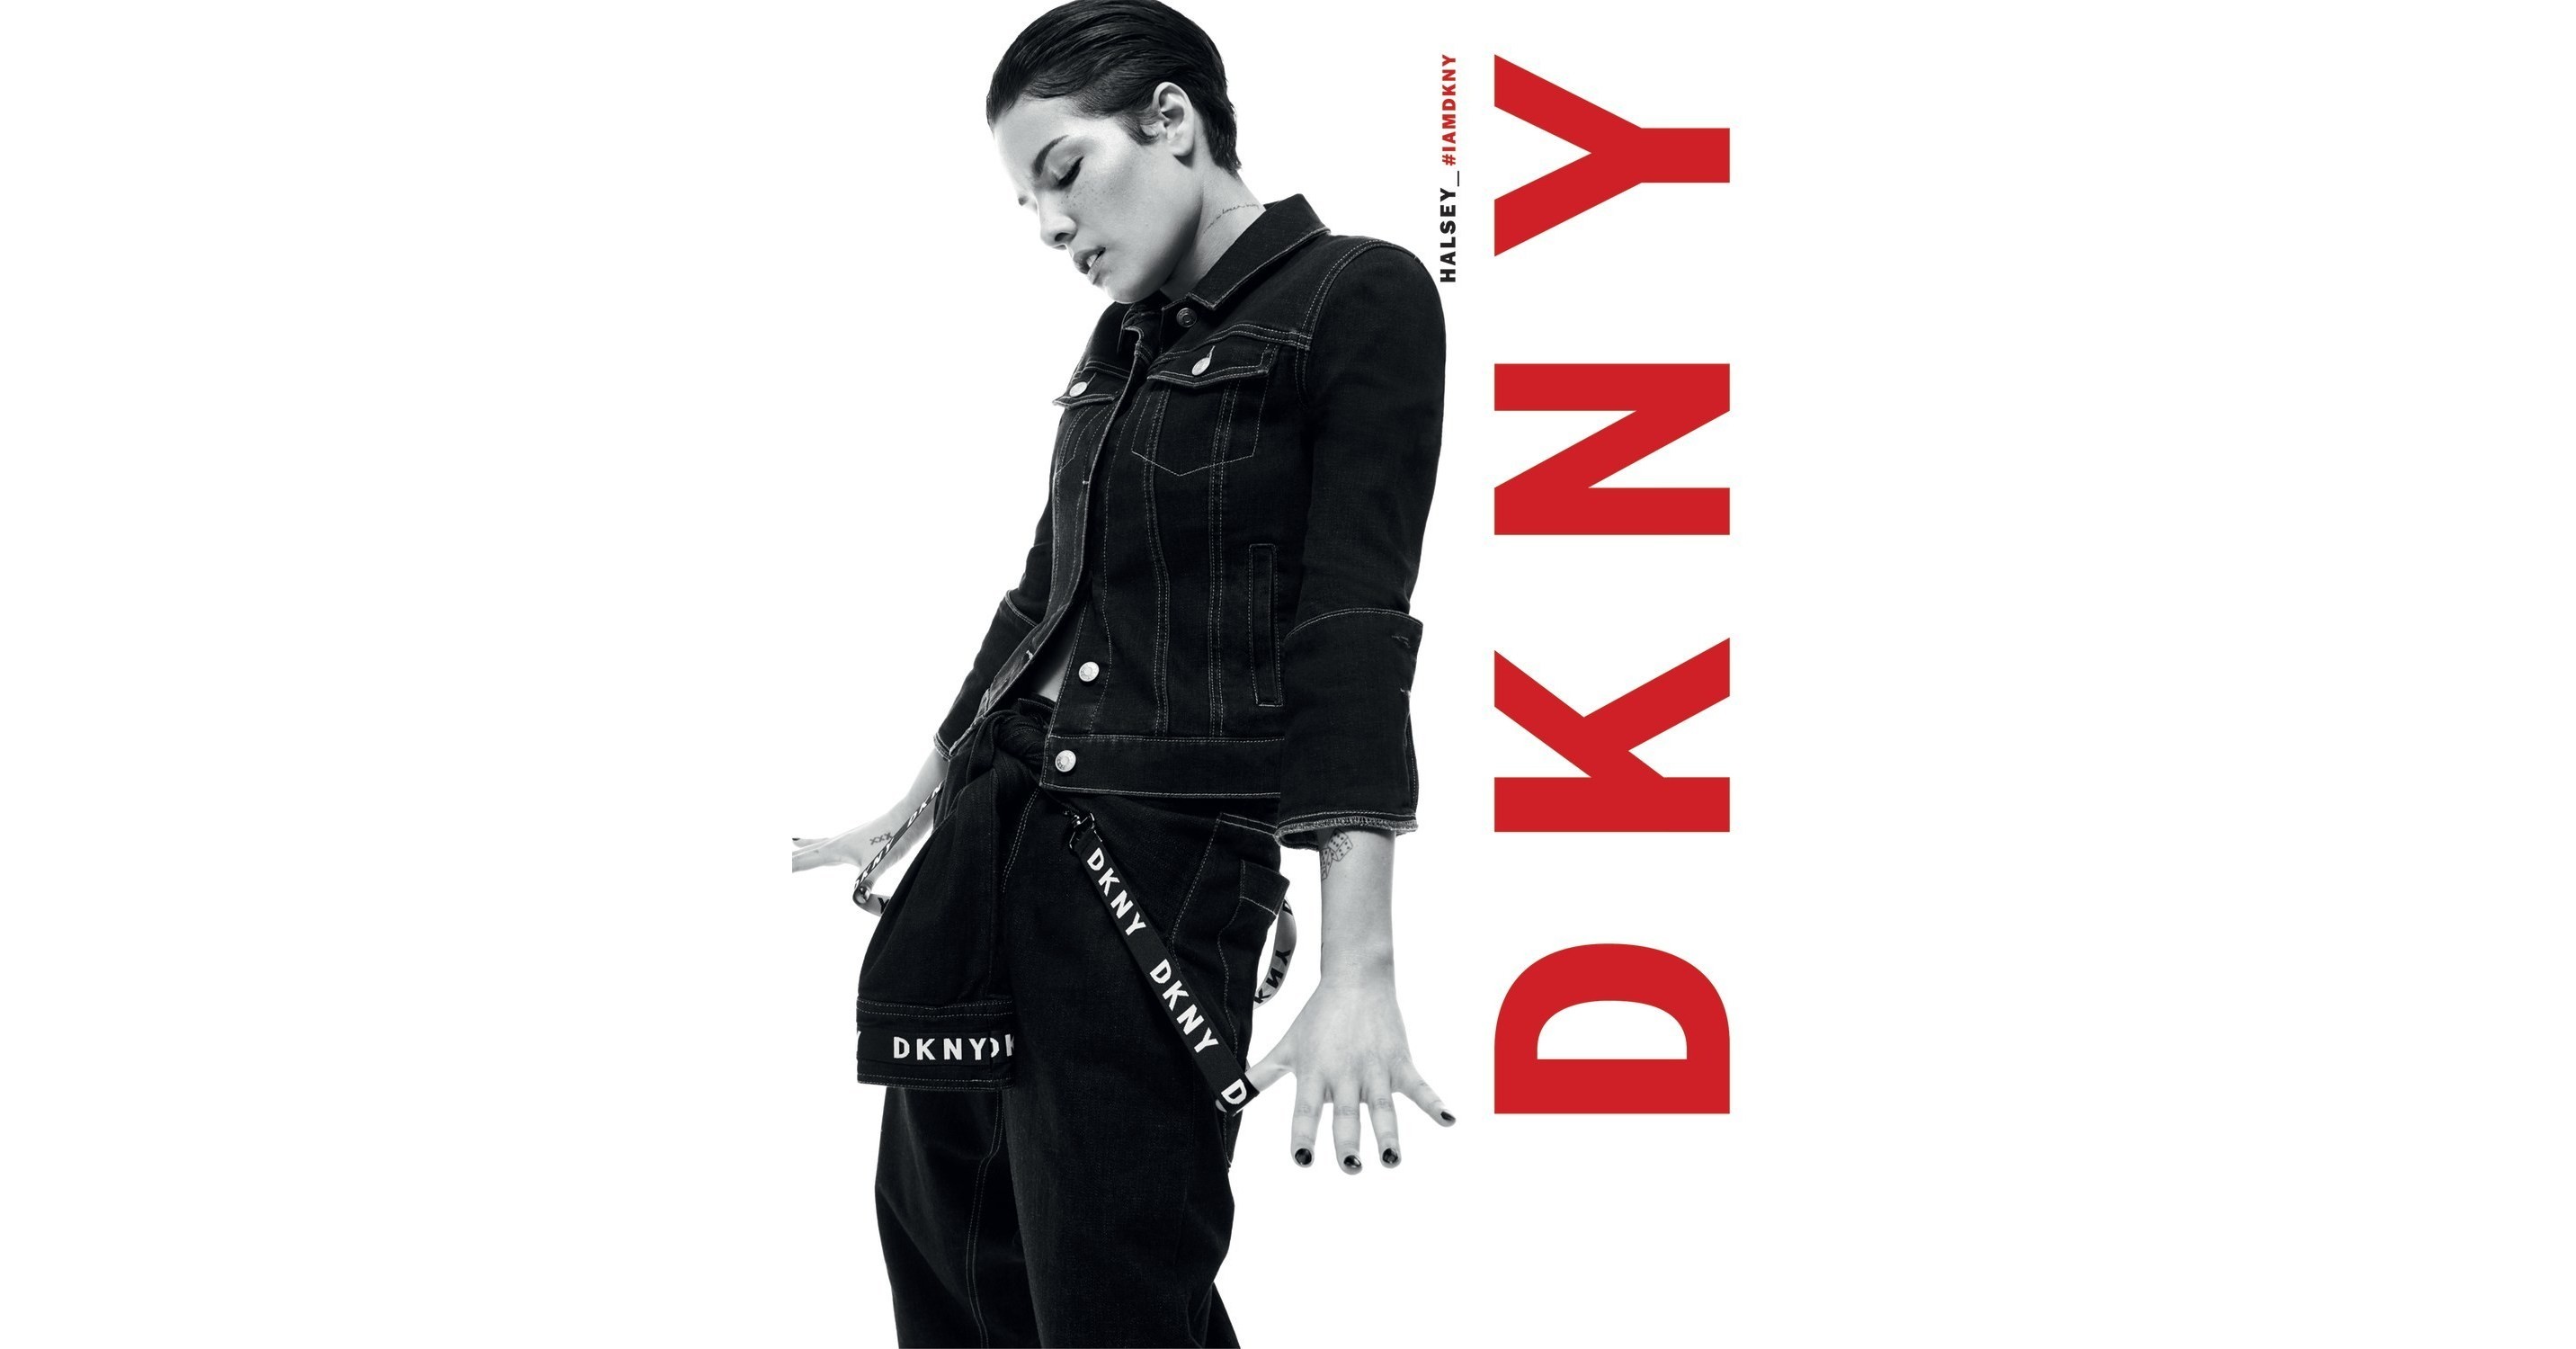 Музыканты Halsey и the Martinez Brothers – в юбилейной кампании DKNY